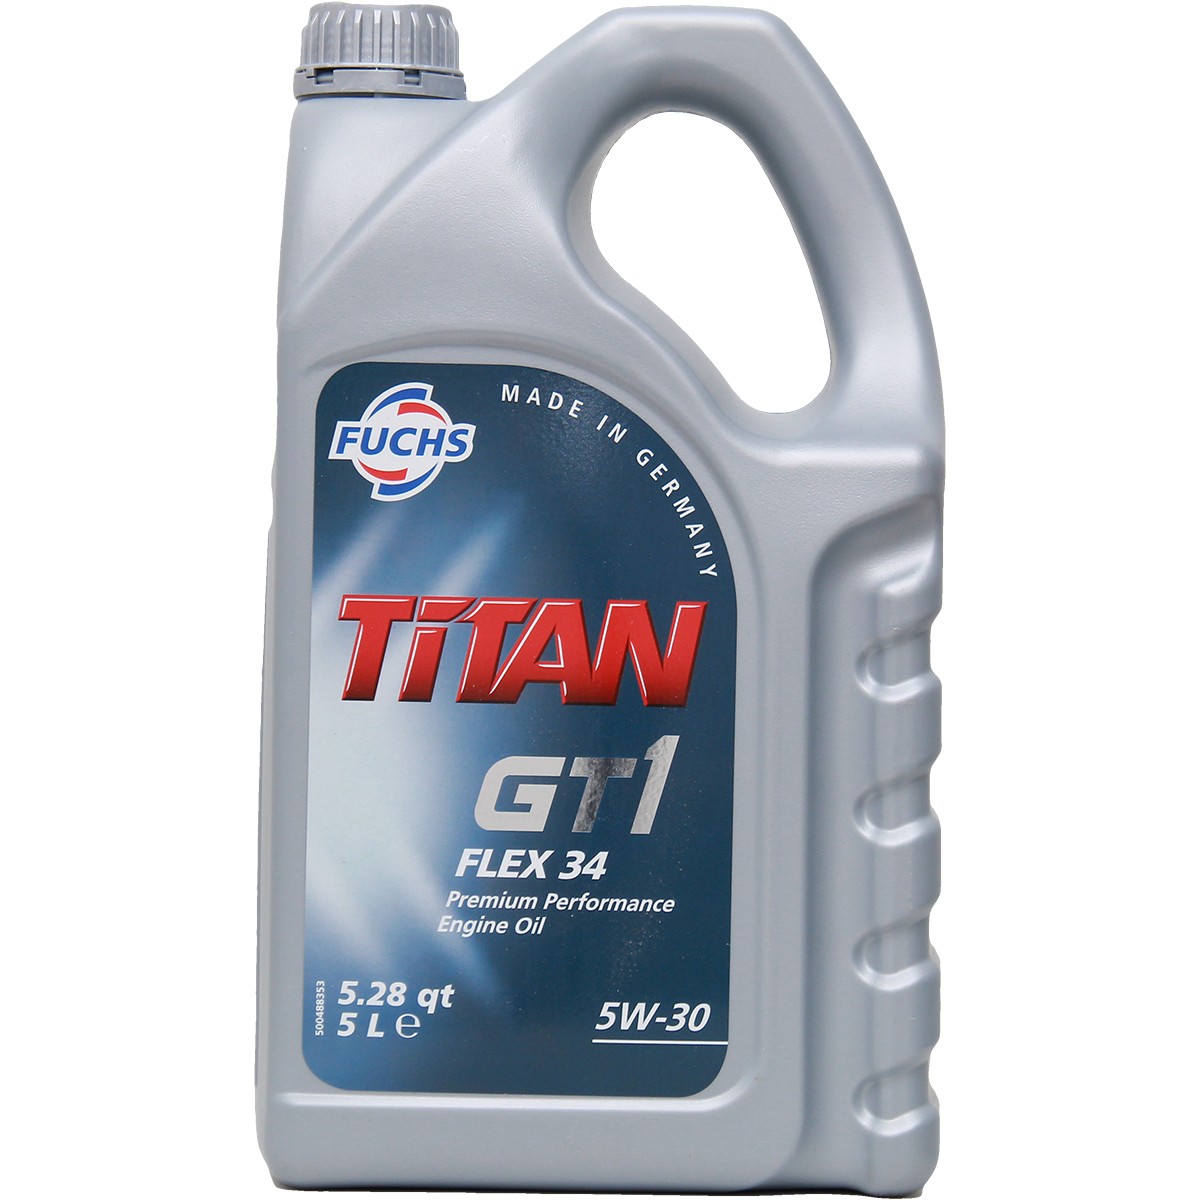 FUCHS TITAN, GT1 FLEX 34 5W-30, 5l Motor oil 601424328 buy